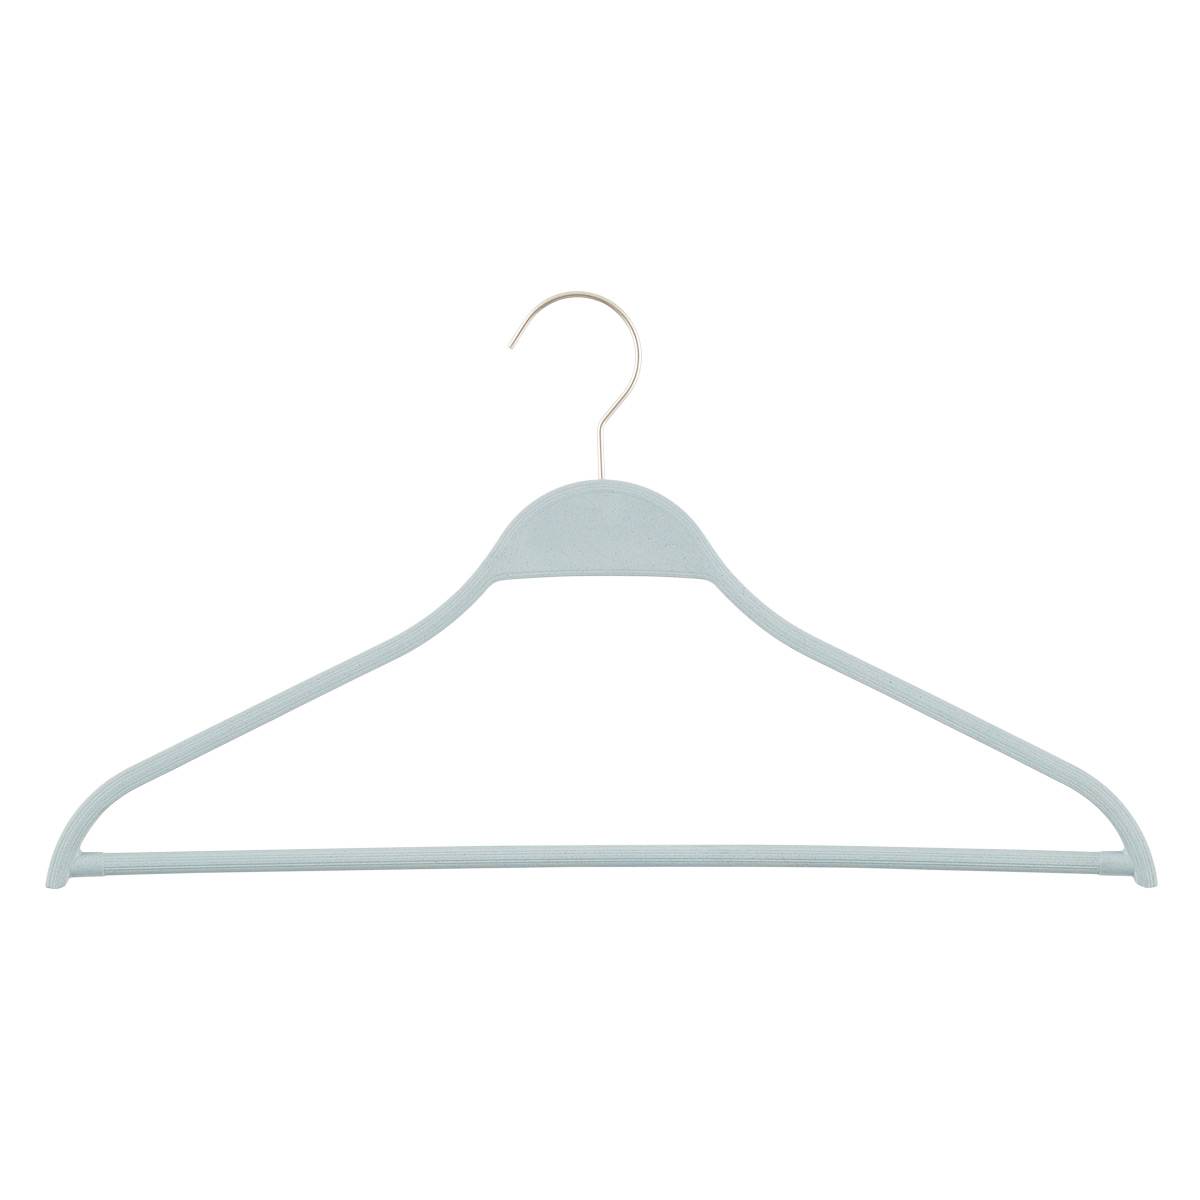 https://www.containerstore.com/catalogimages/384503/10080313-Eco-plastic-suit-hanger-ste.jpg